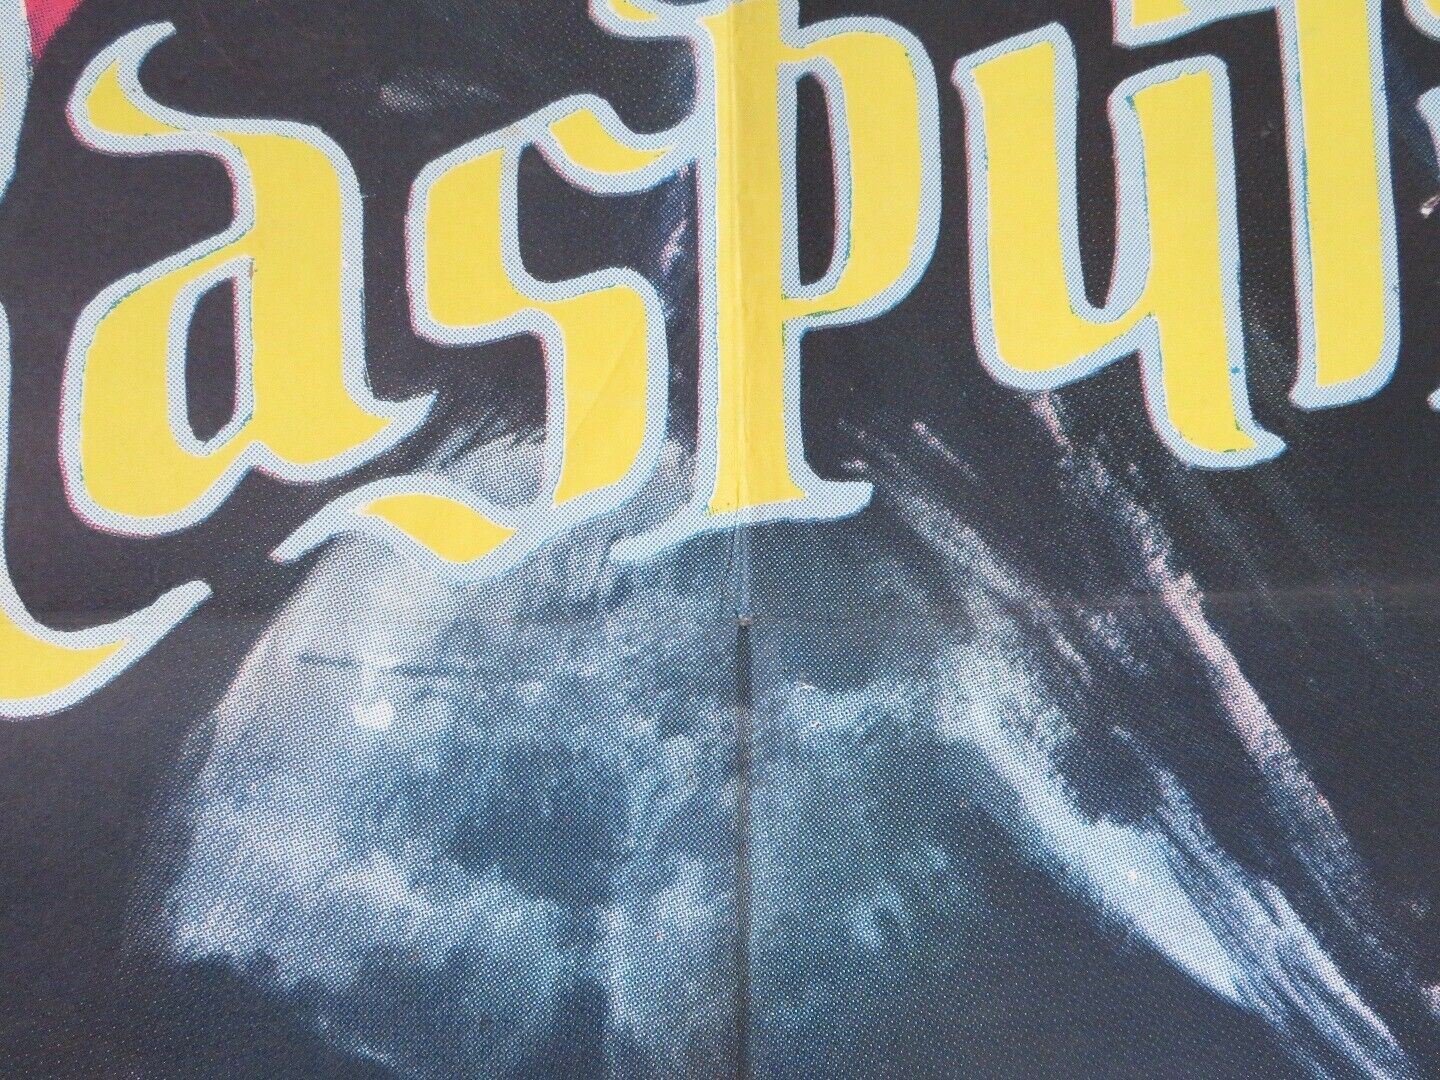 NIGHTS OF RASPUTIN/The Night They Killed Rasputin FOLDED US ONE SHEET POSTER '60